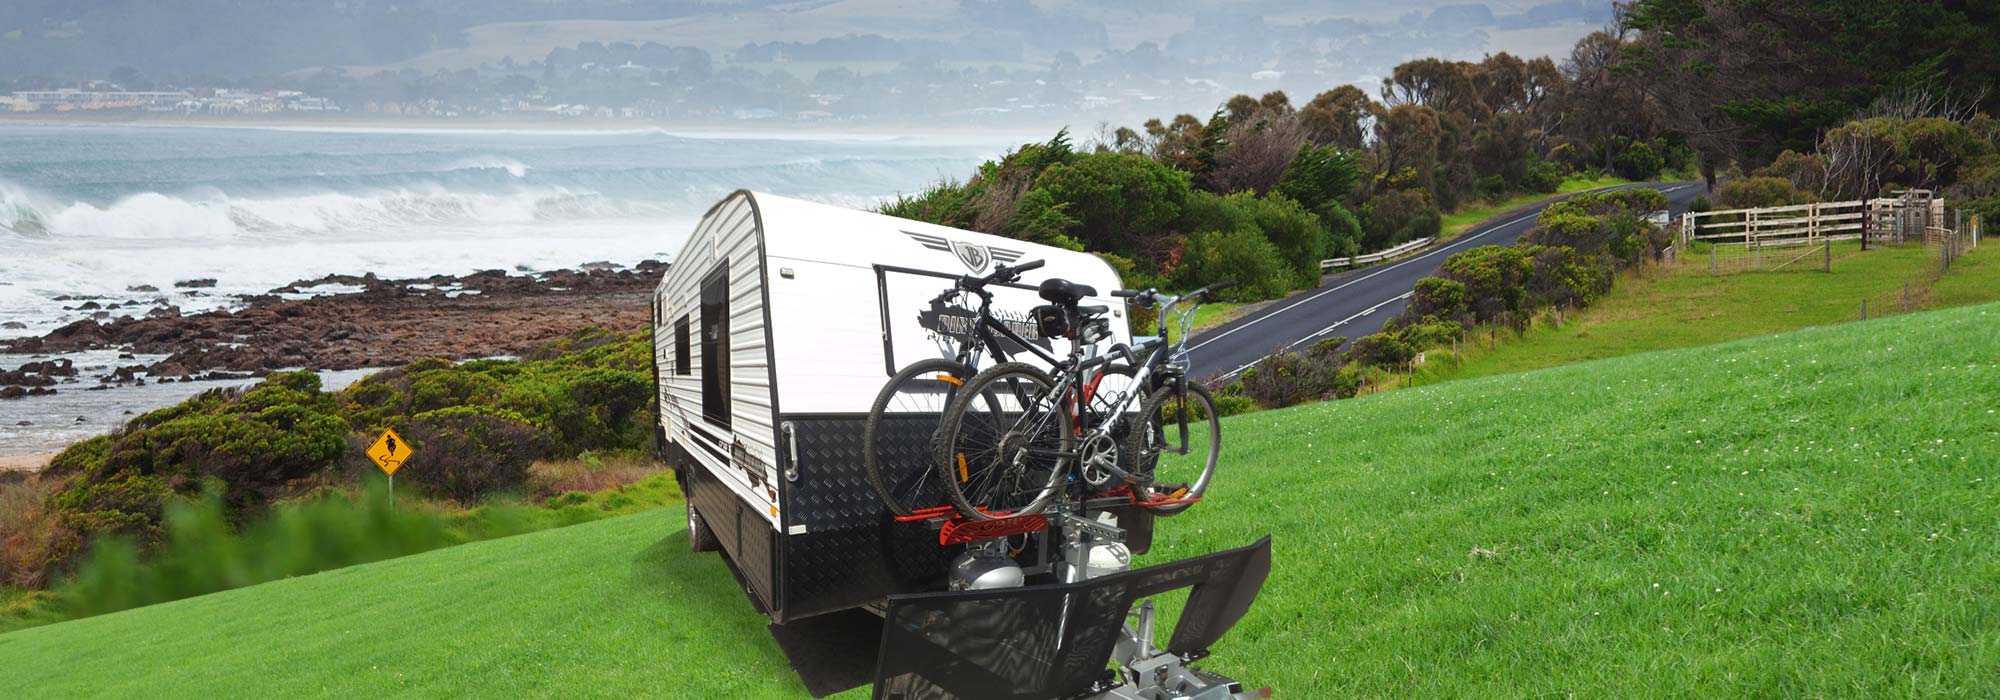 gripsport bike rack on caravan